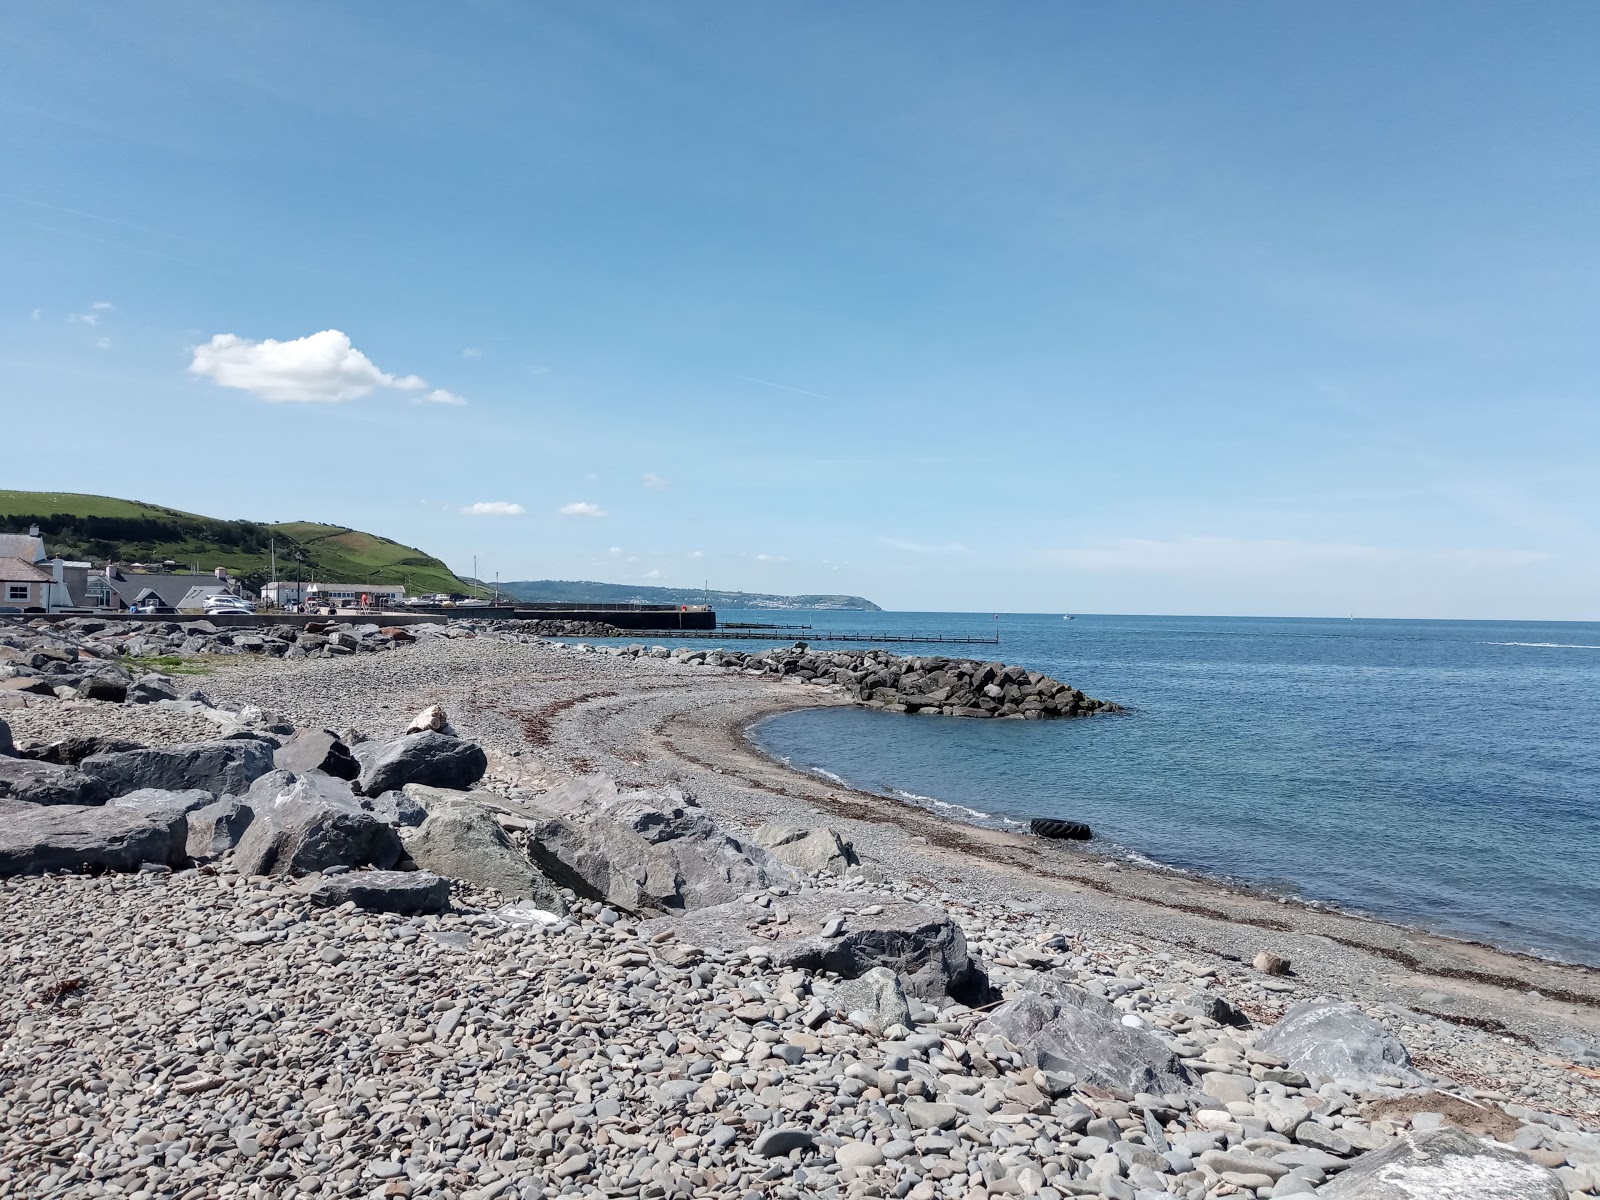 Fotografija Aberaeron plaža z sivi kamenček površino